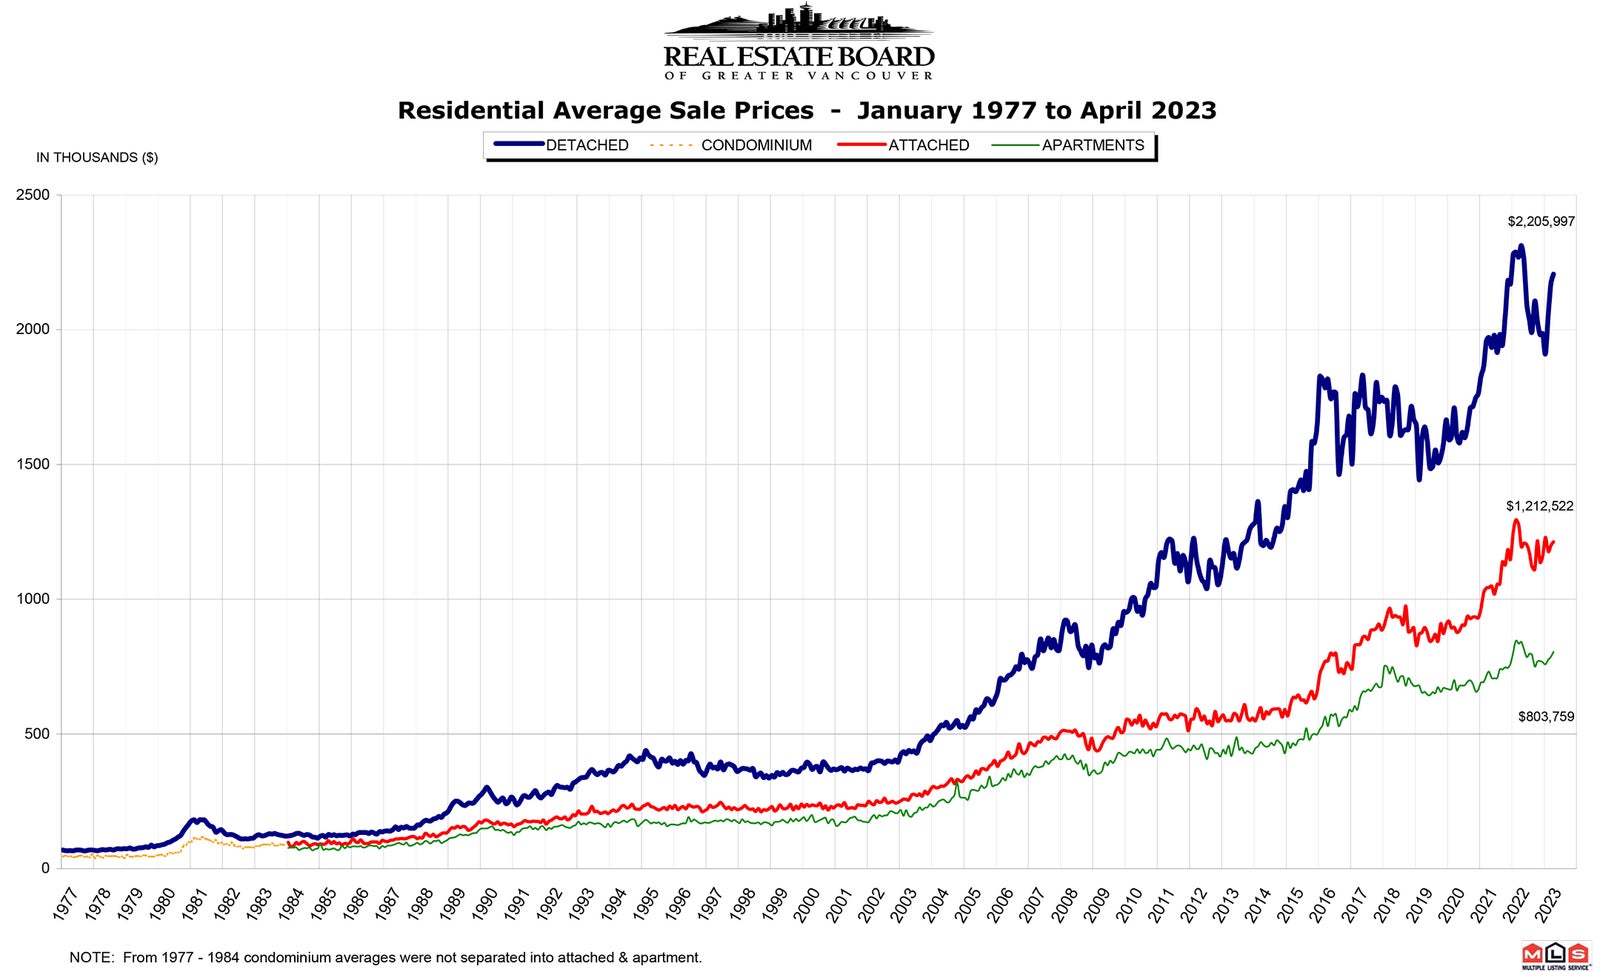 Residential Average Sale Price RASP April 2023 Real Estate Vancouver Chris Frederickson